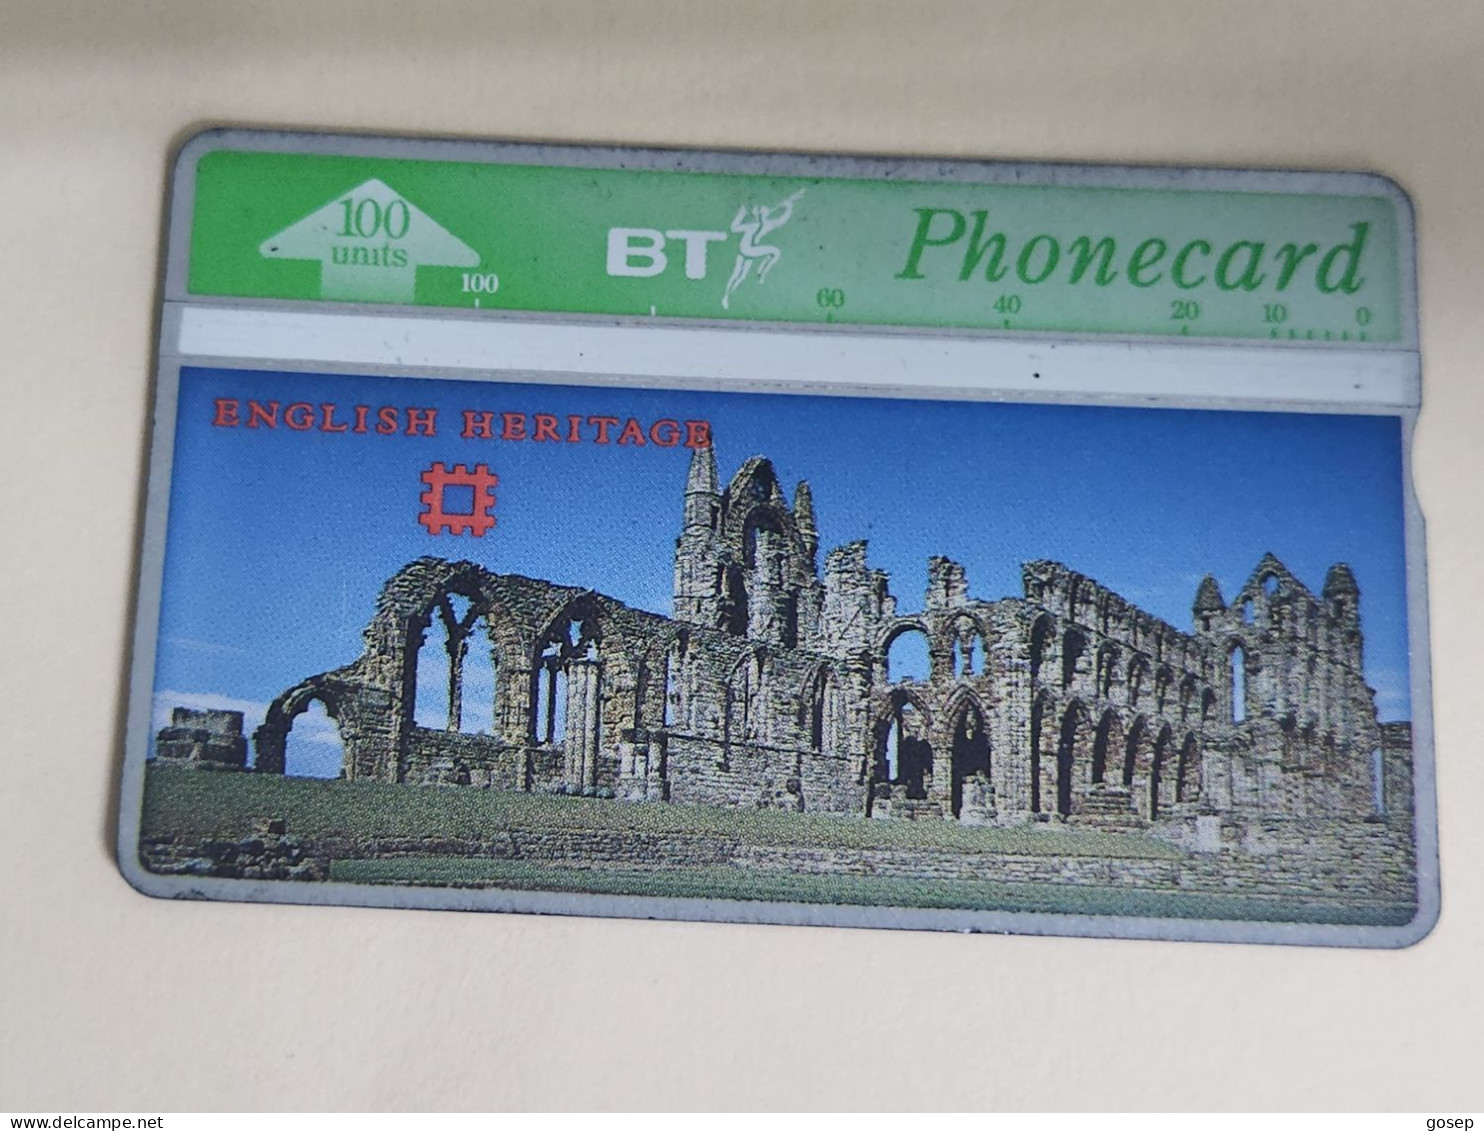 United Kingdom-(BTA122)-HERITAGE-Whitby Abbey-(217)(100units)(527H30198)price Cataloge3.00£-used+1card Prepiad Free - BT Emissioni Pubblicitarie